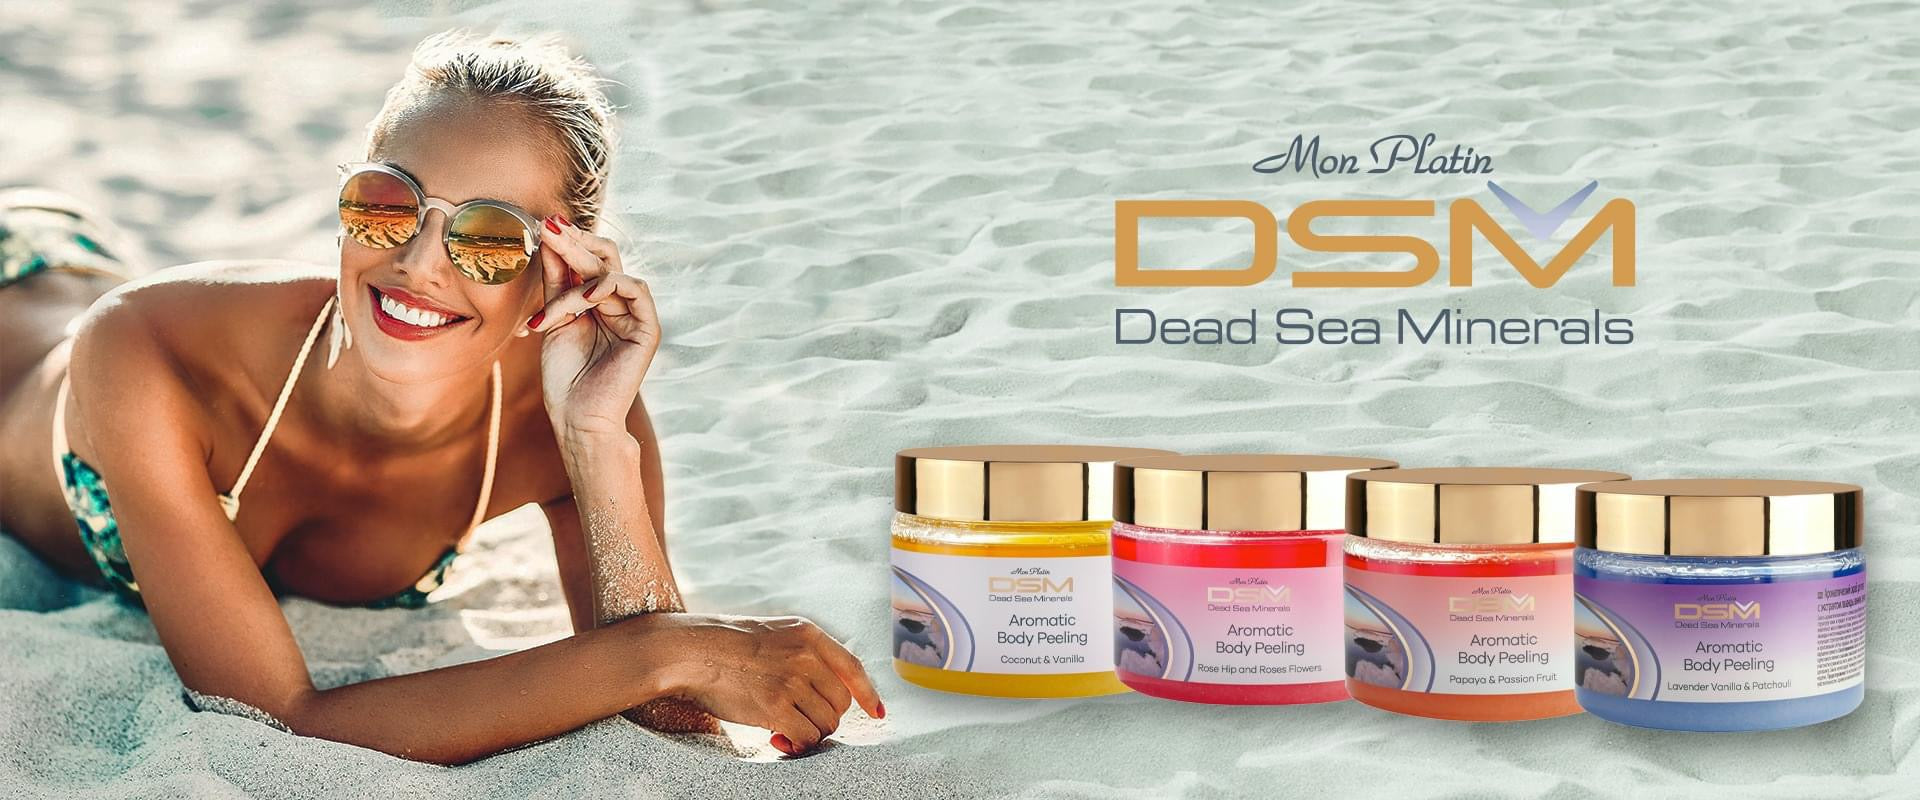 Mon Platin DSM | Dead Sea Minerals